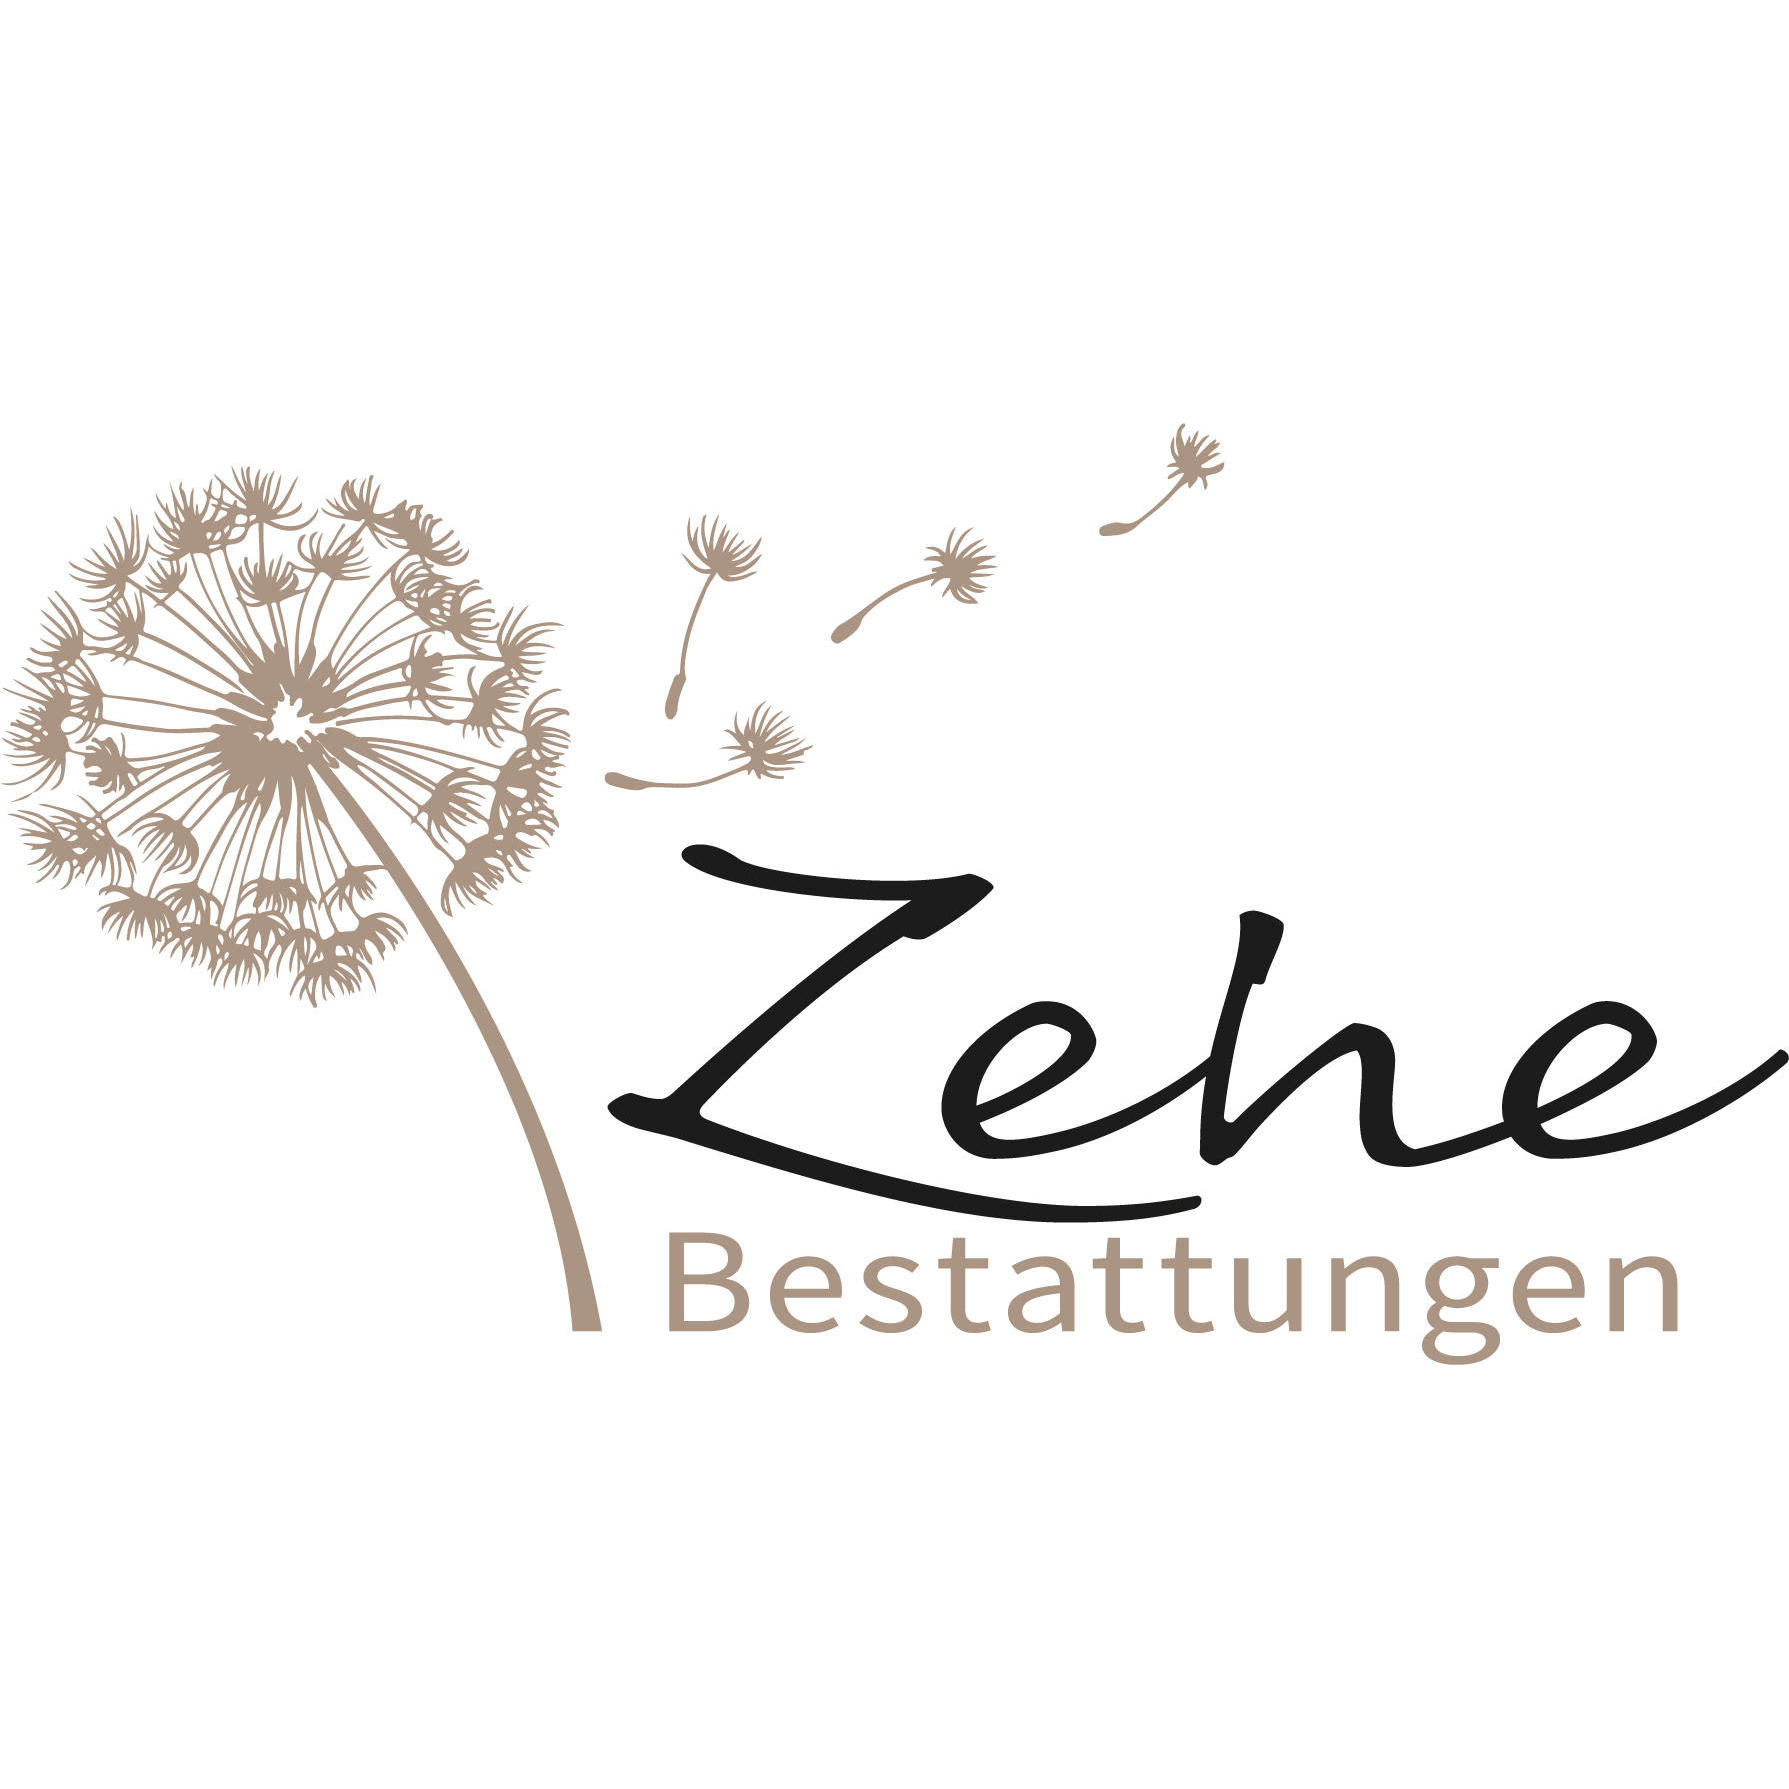 Bestattungen Zehe in Hassfurt - Logo